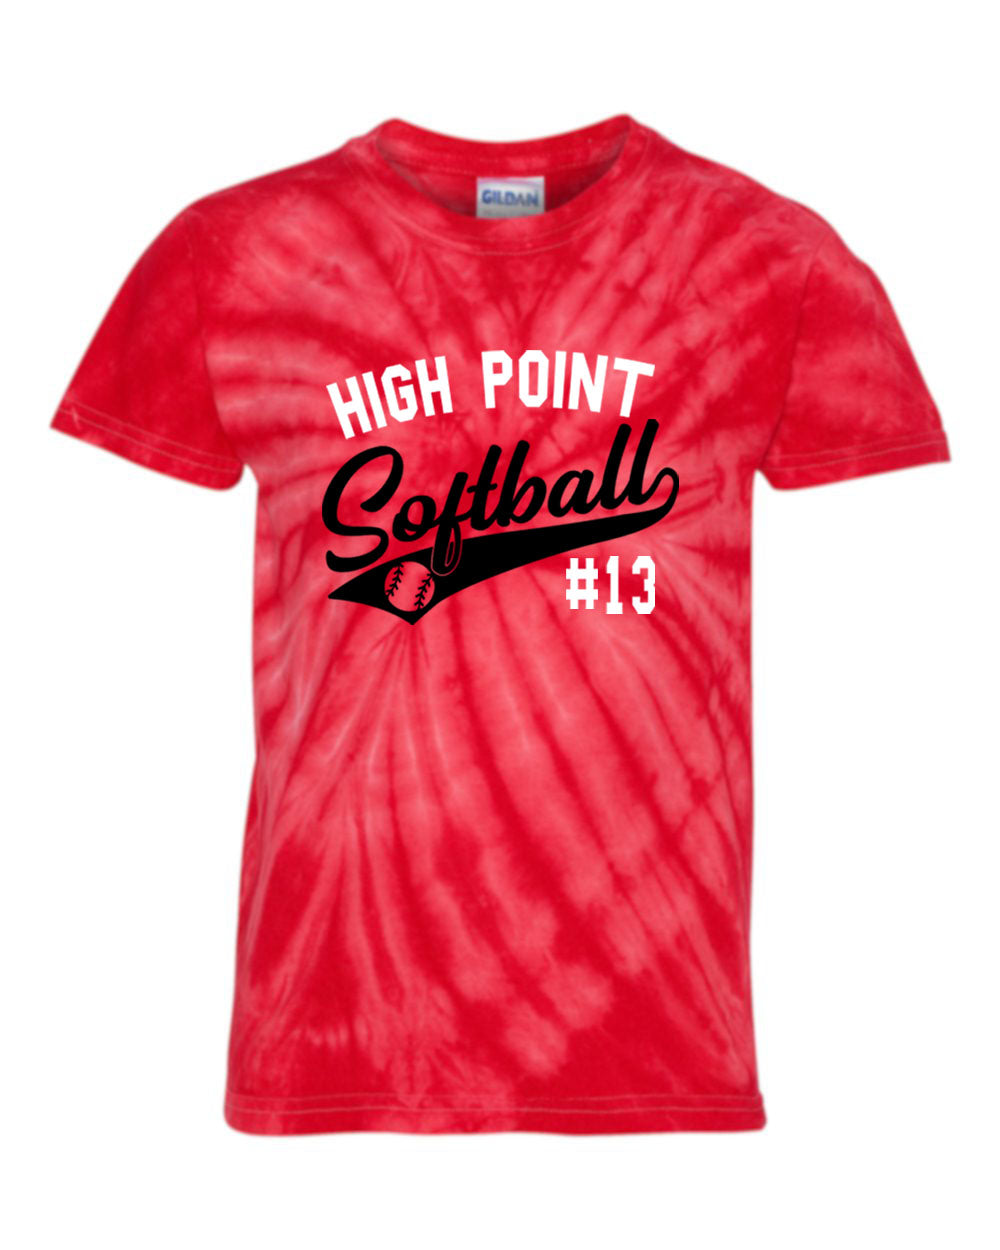 High Point Softball Tie Dye t-shirt Design 2